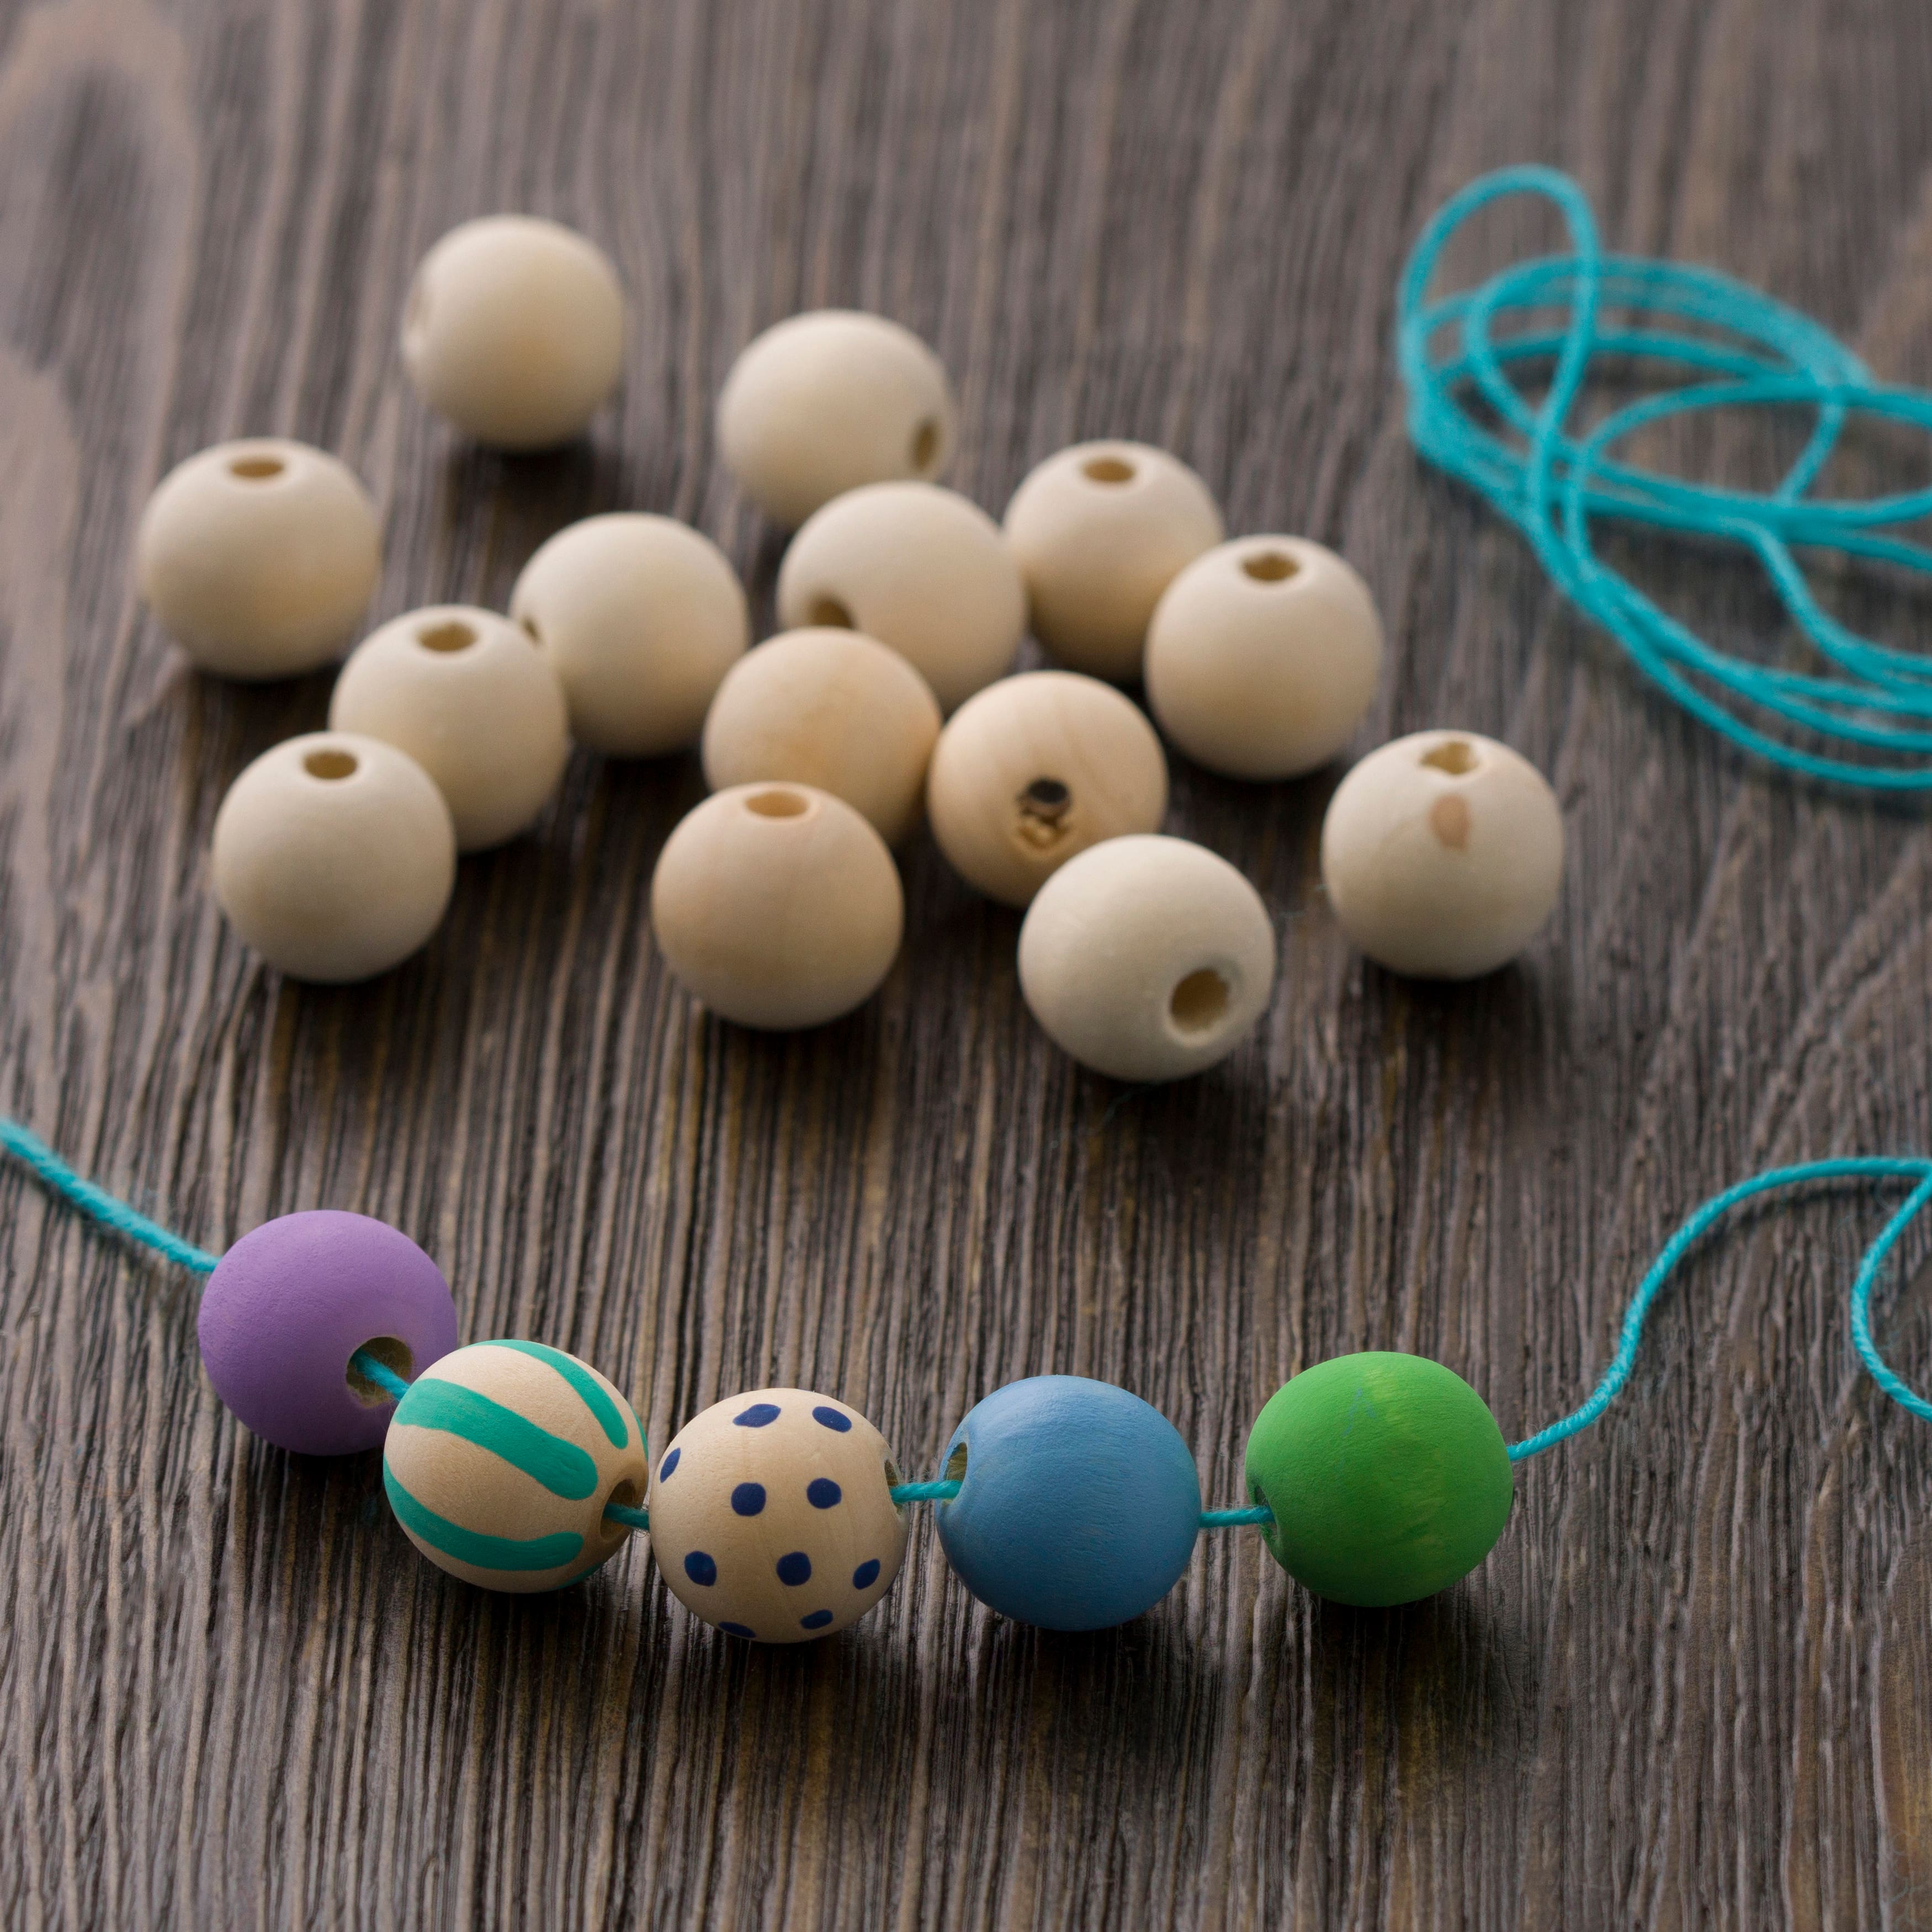 3/4 Wood Ball Beads, 3/16 Hole